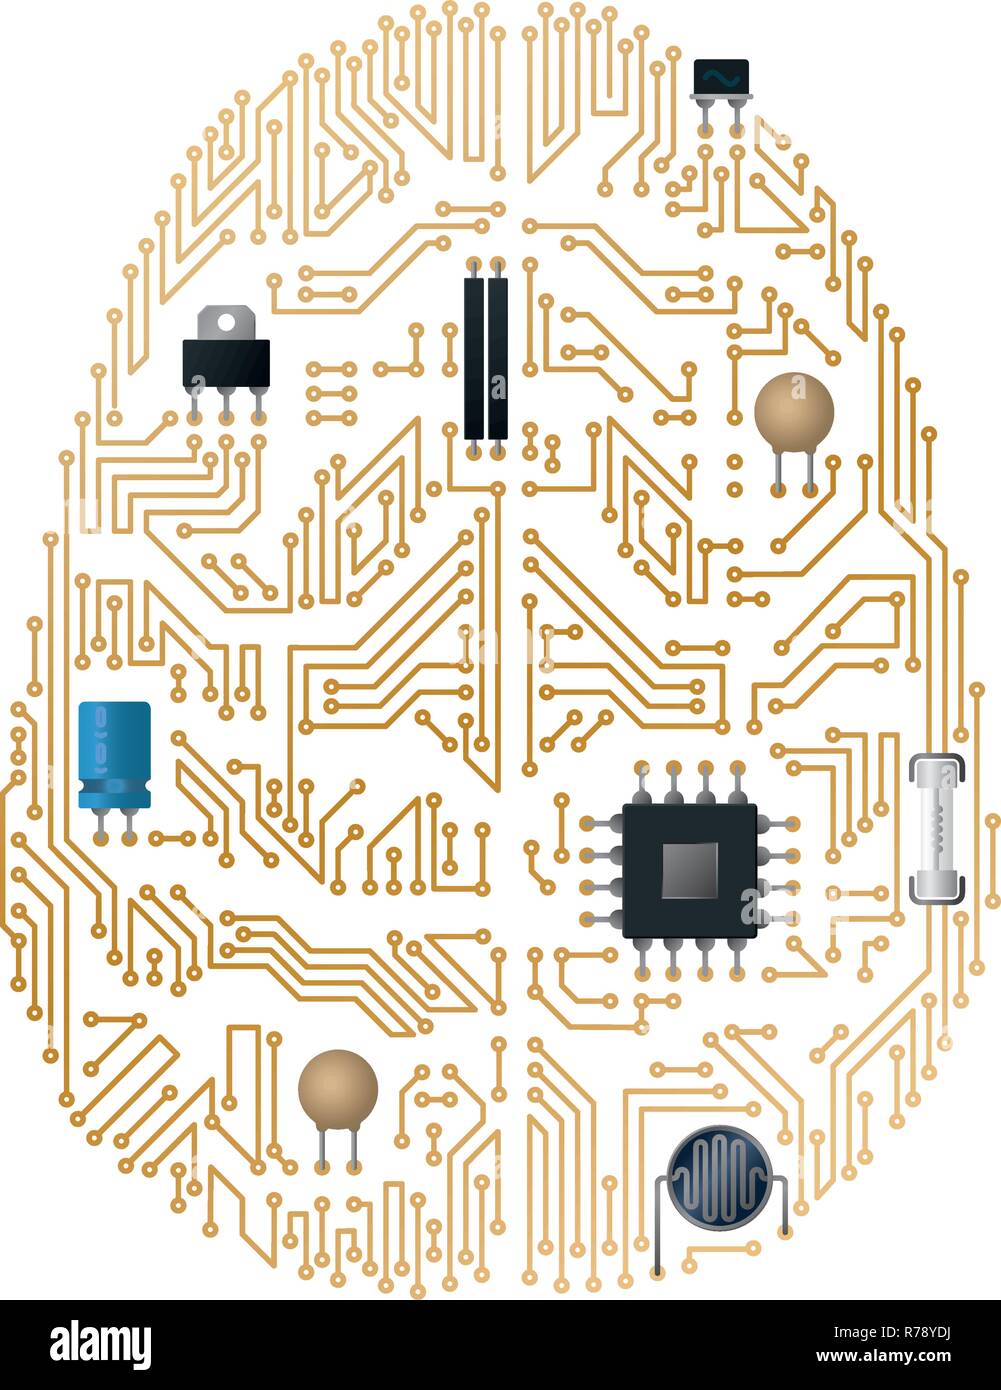 Download Human brain motherboard vector illustration. Artificial ...